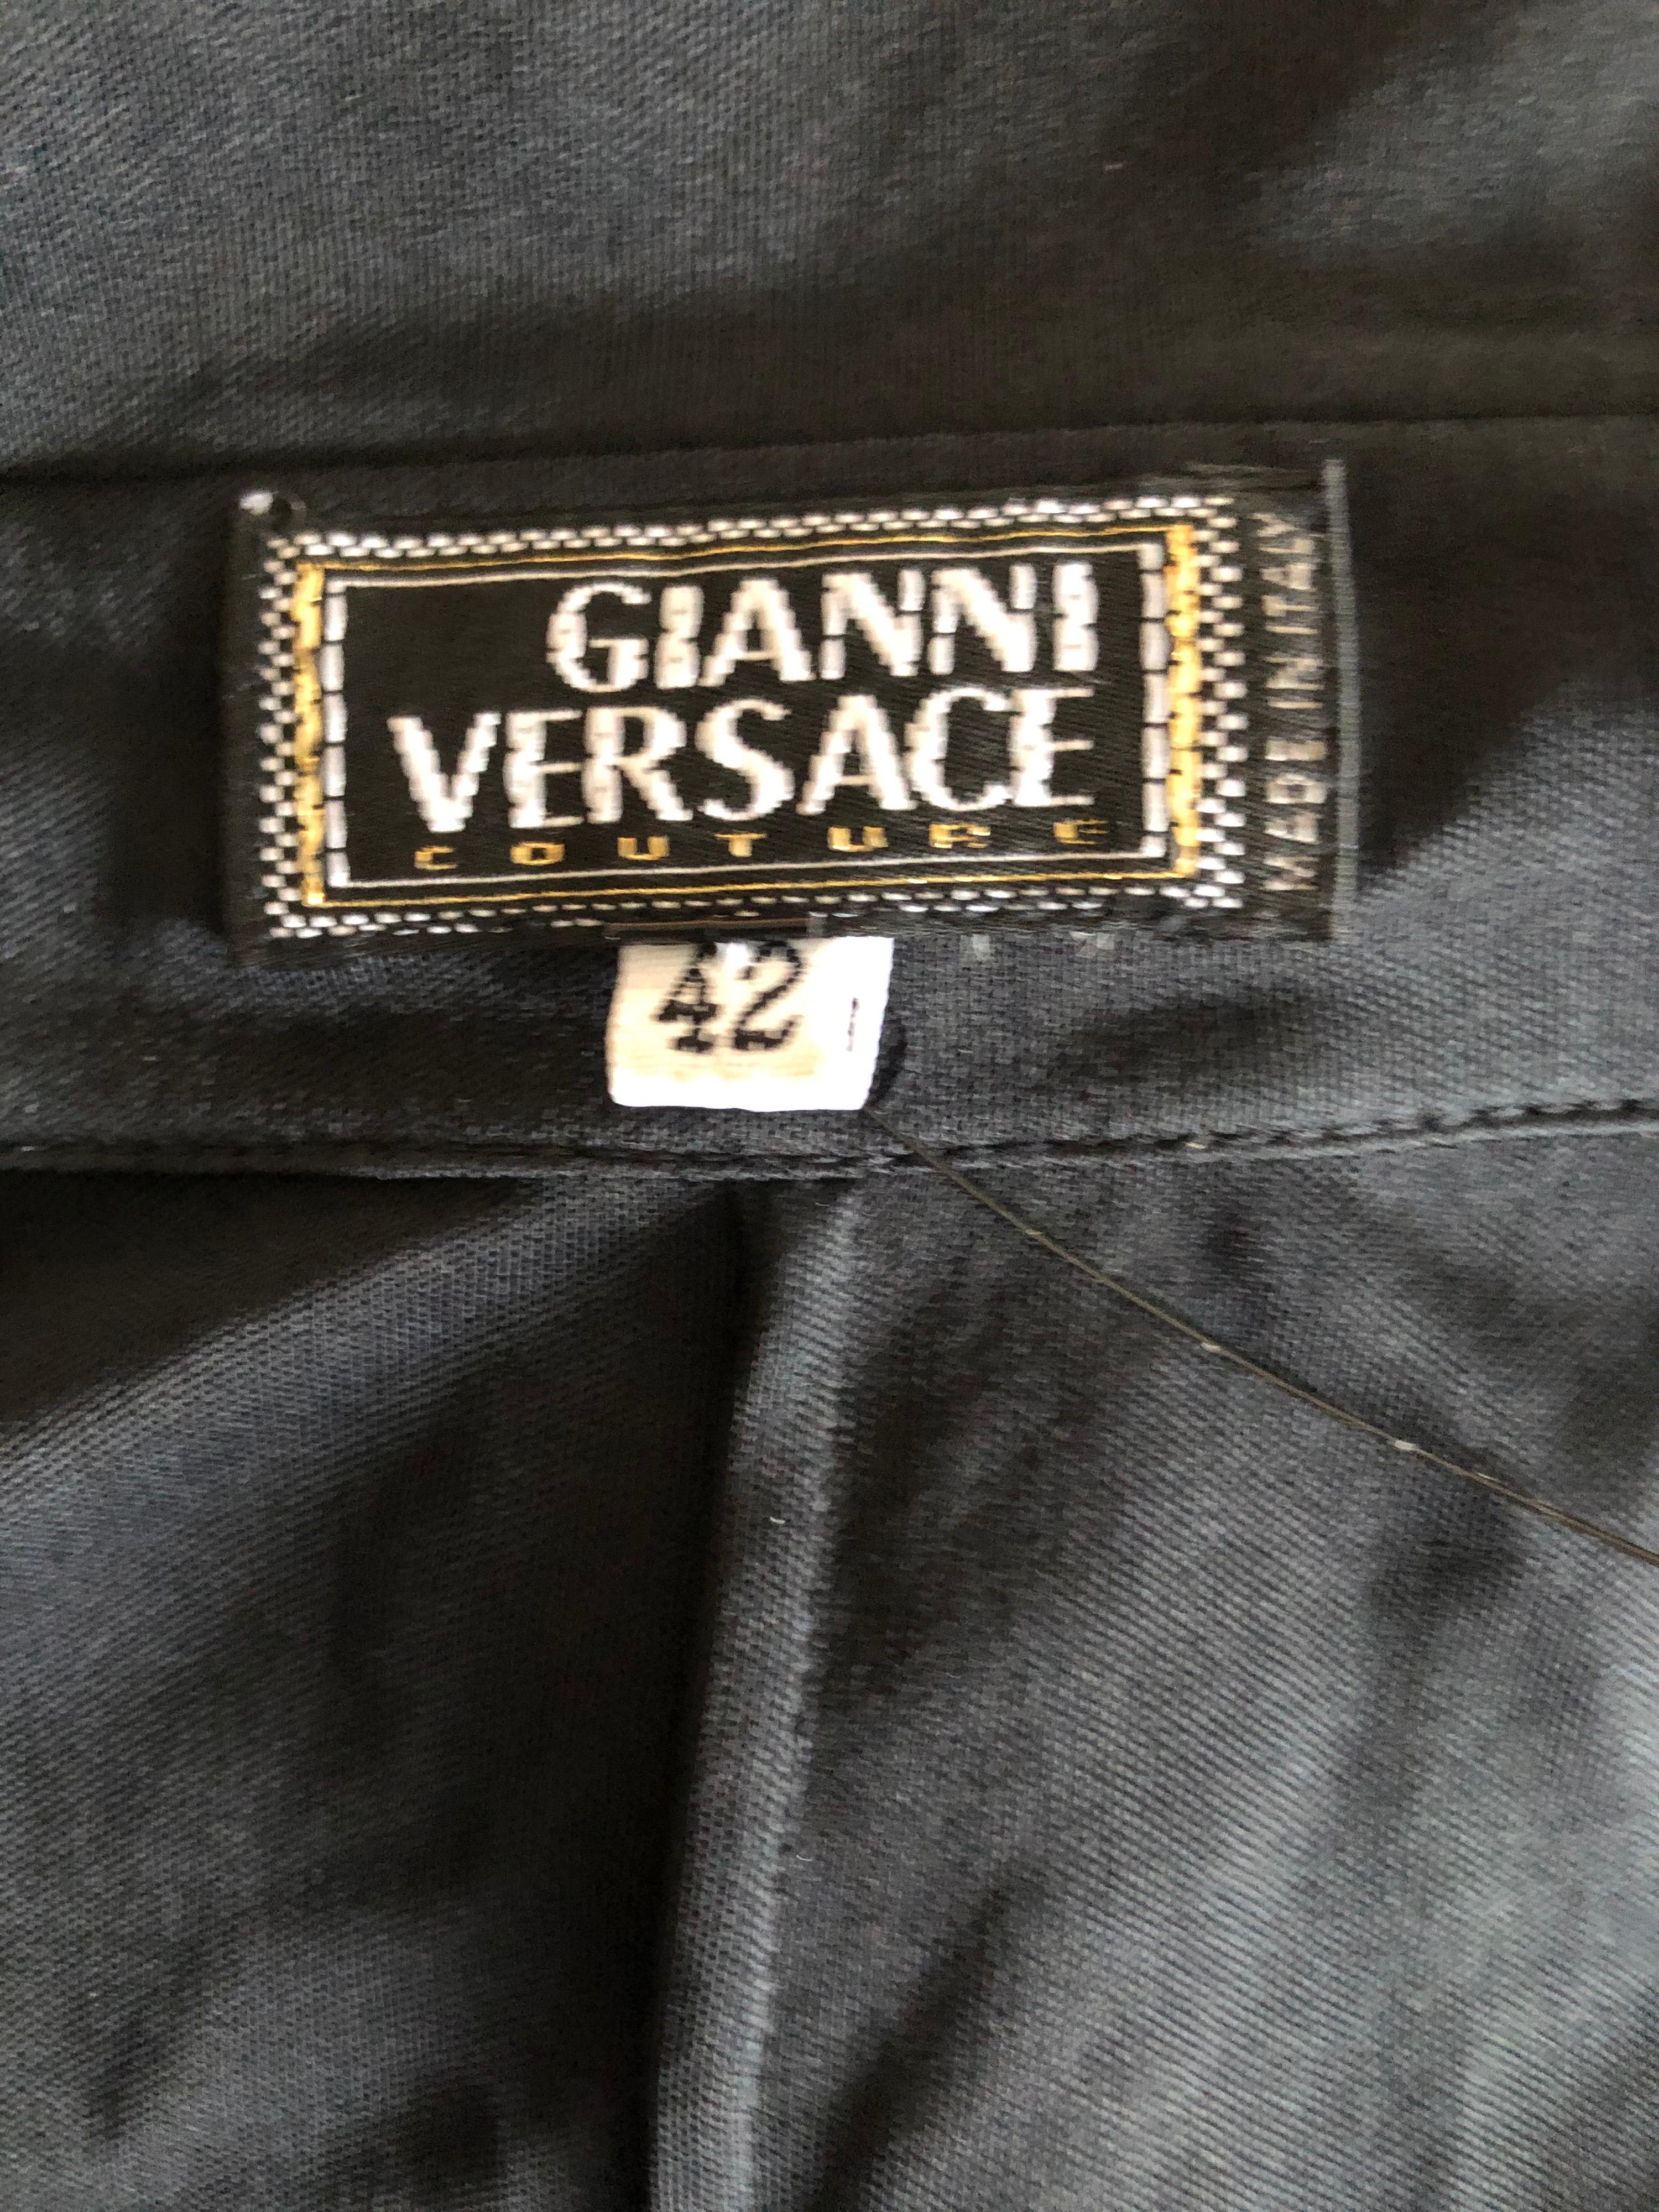 Gianni Versace S/S 2000 Runway Vintage Plunging Neckline Black Dress  3